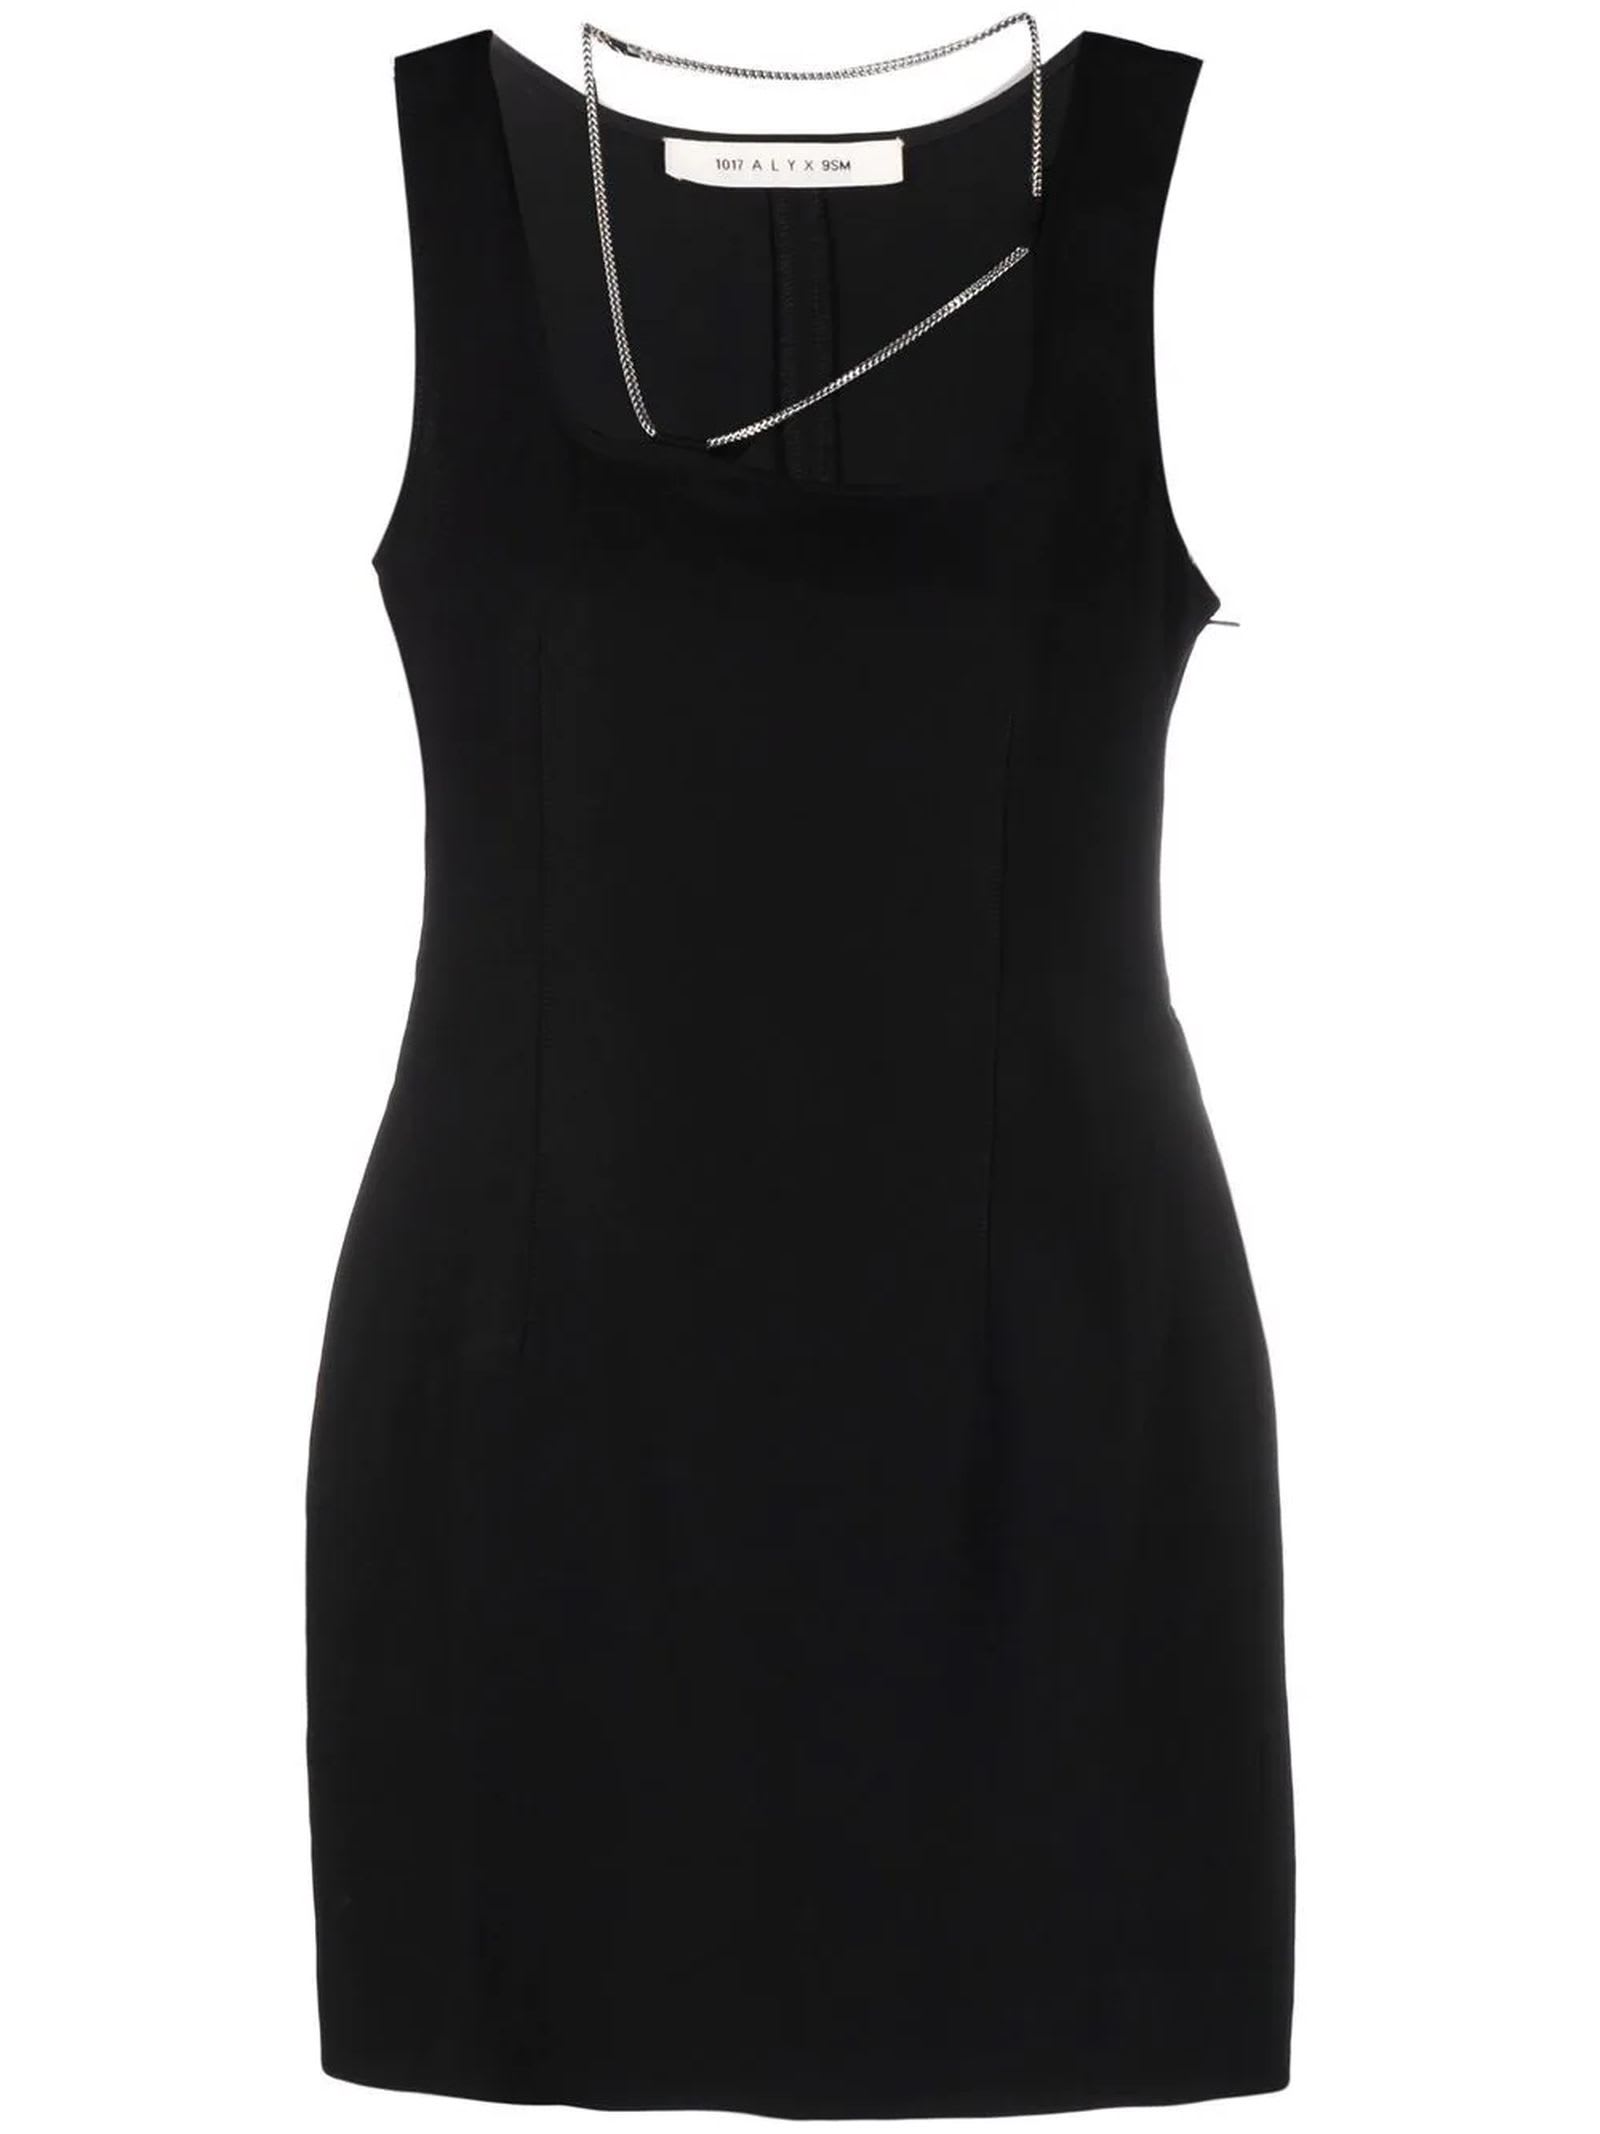 1017 ALYX 9SM Black Mid Length Dress